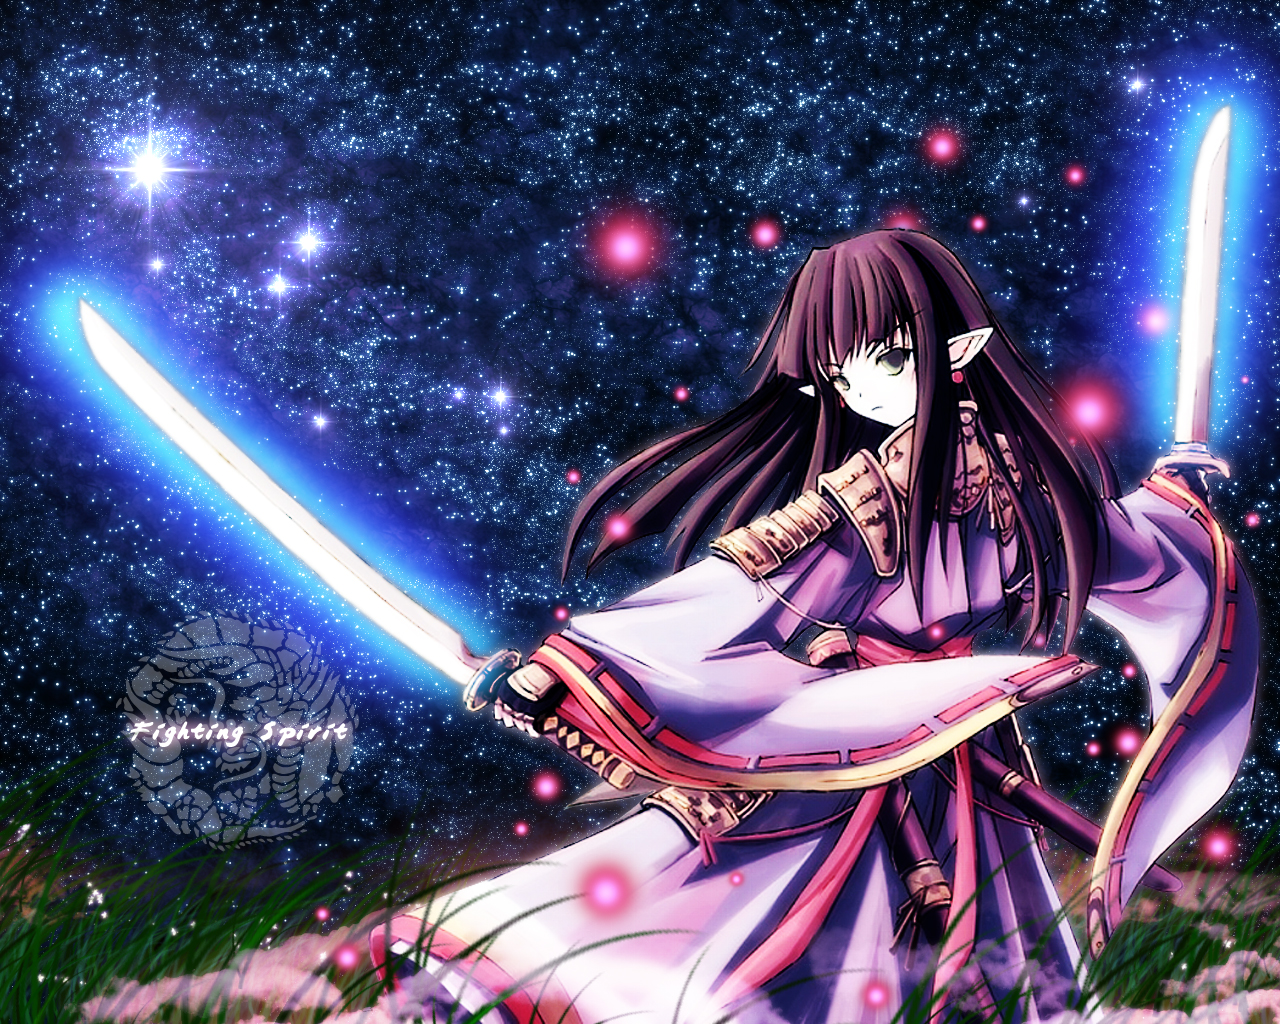 fighting spirit, star, sword, purple, space, women, anime